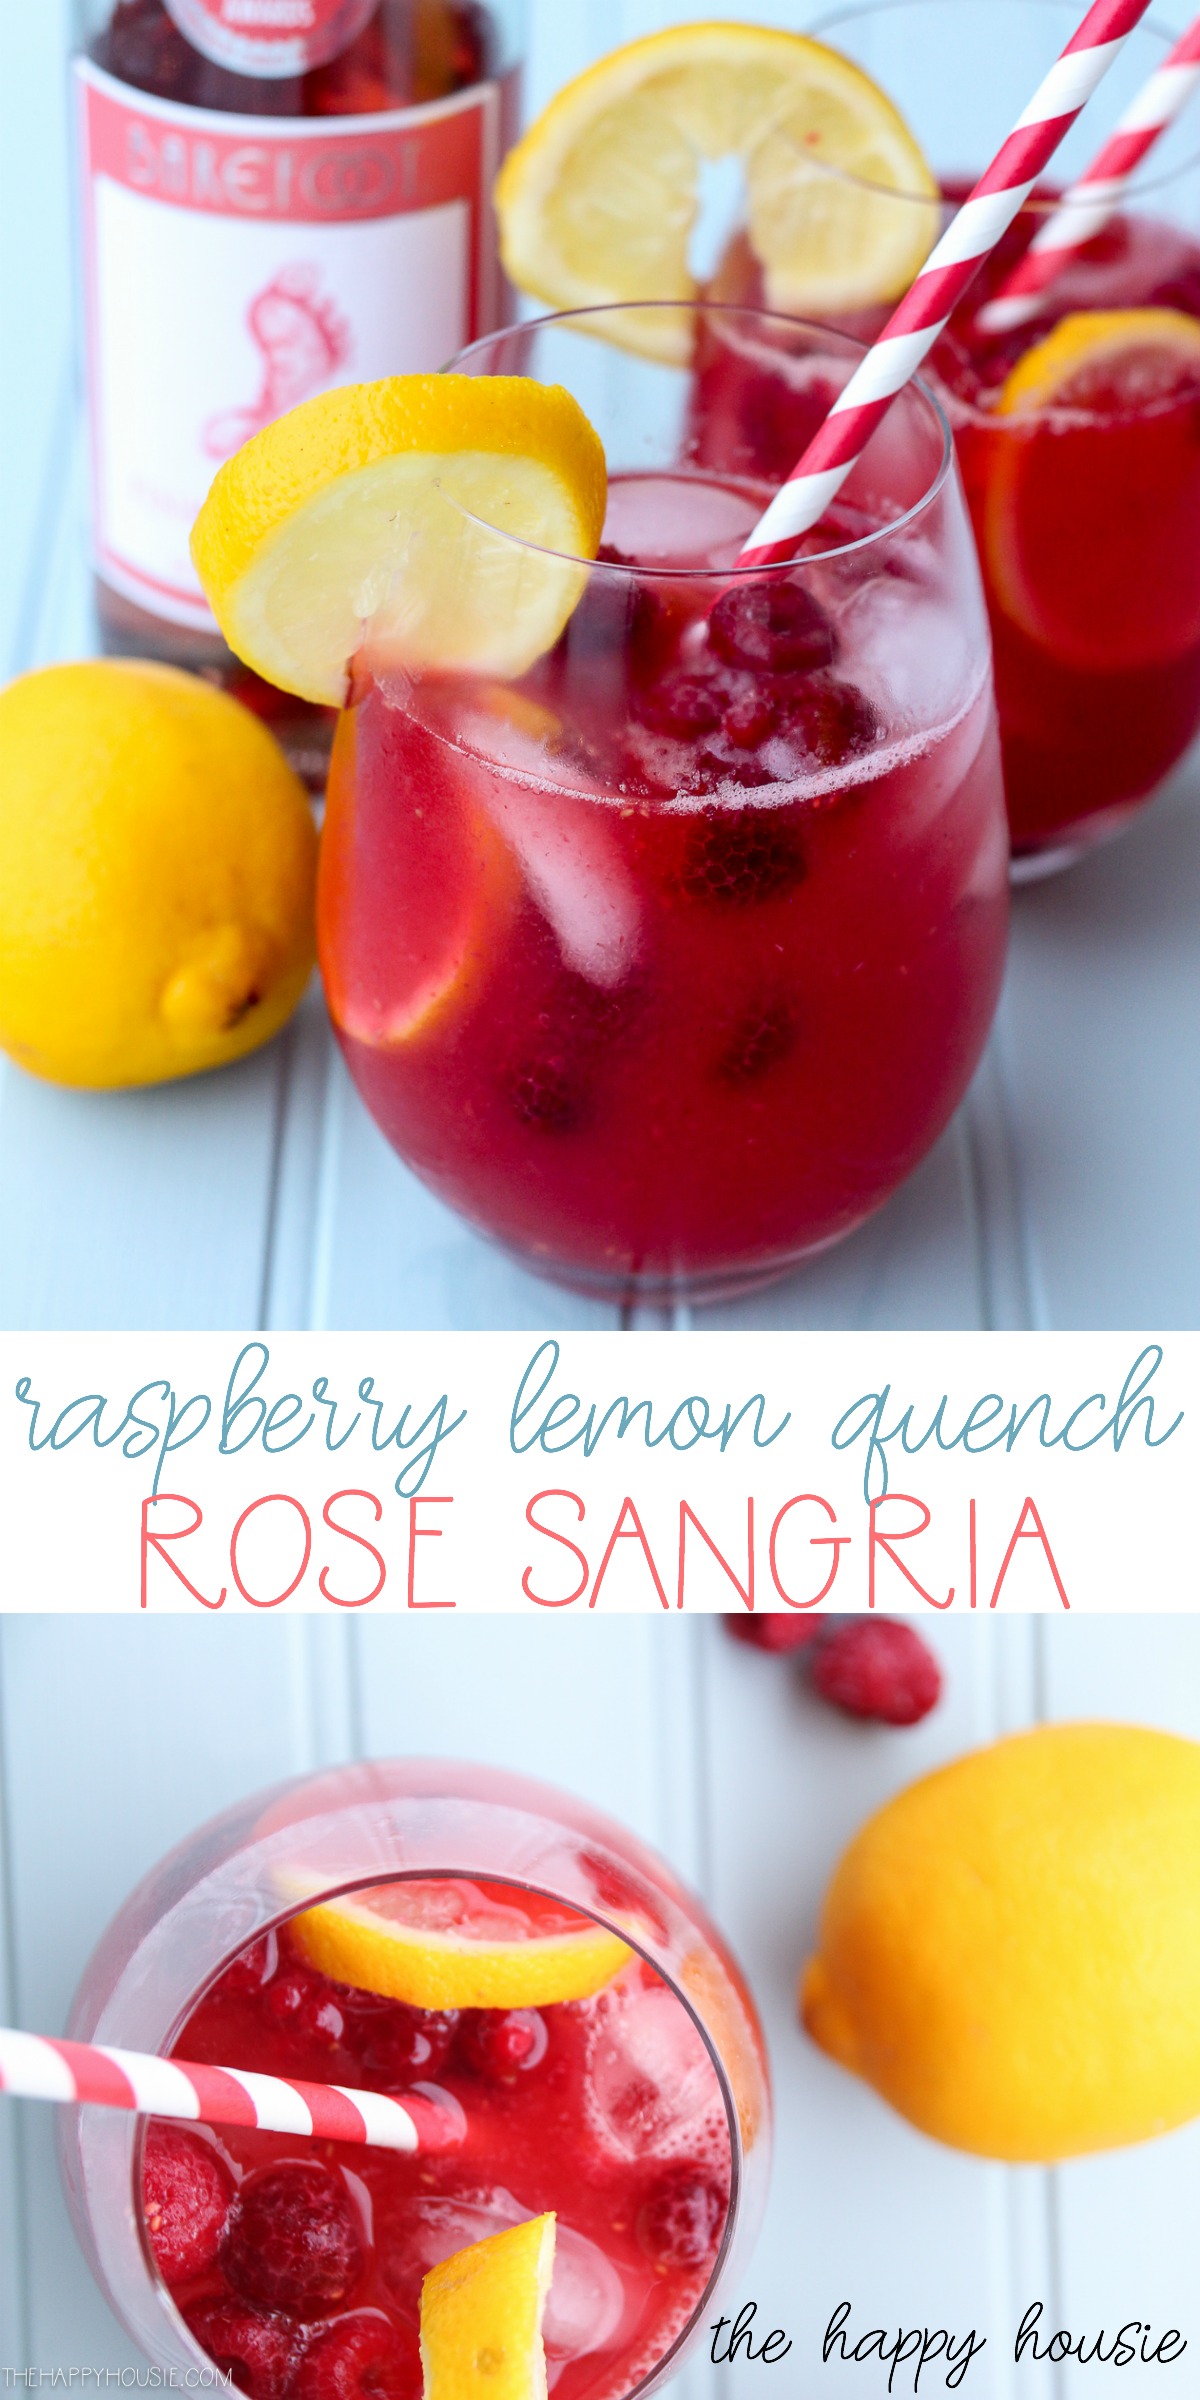 Raspberry Lemon Quench Rose Sangria graphic.